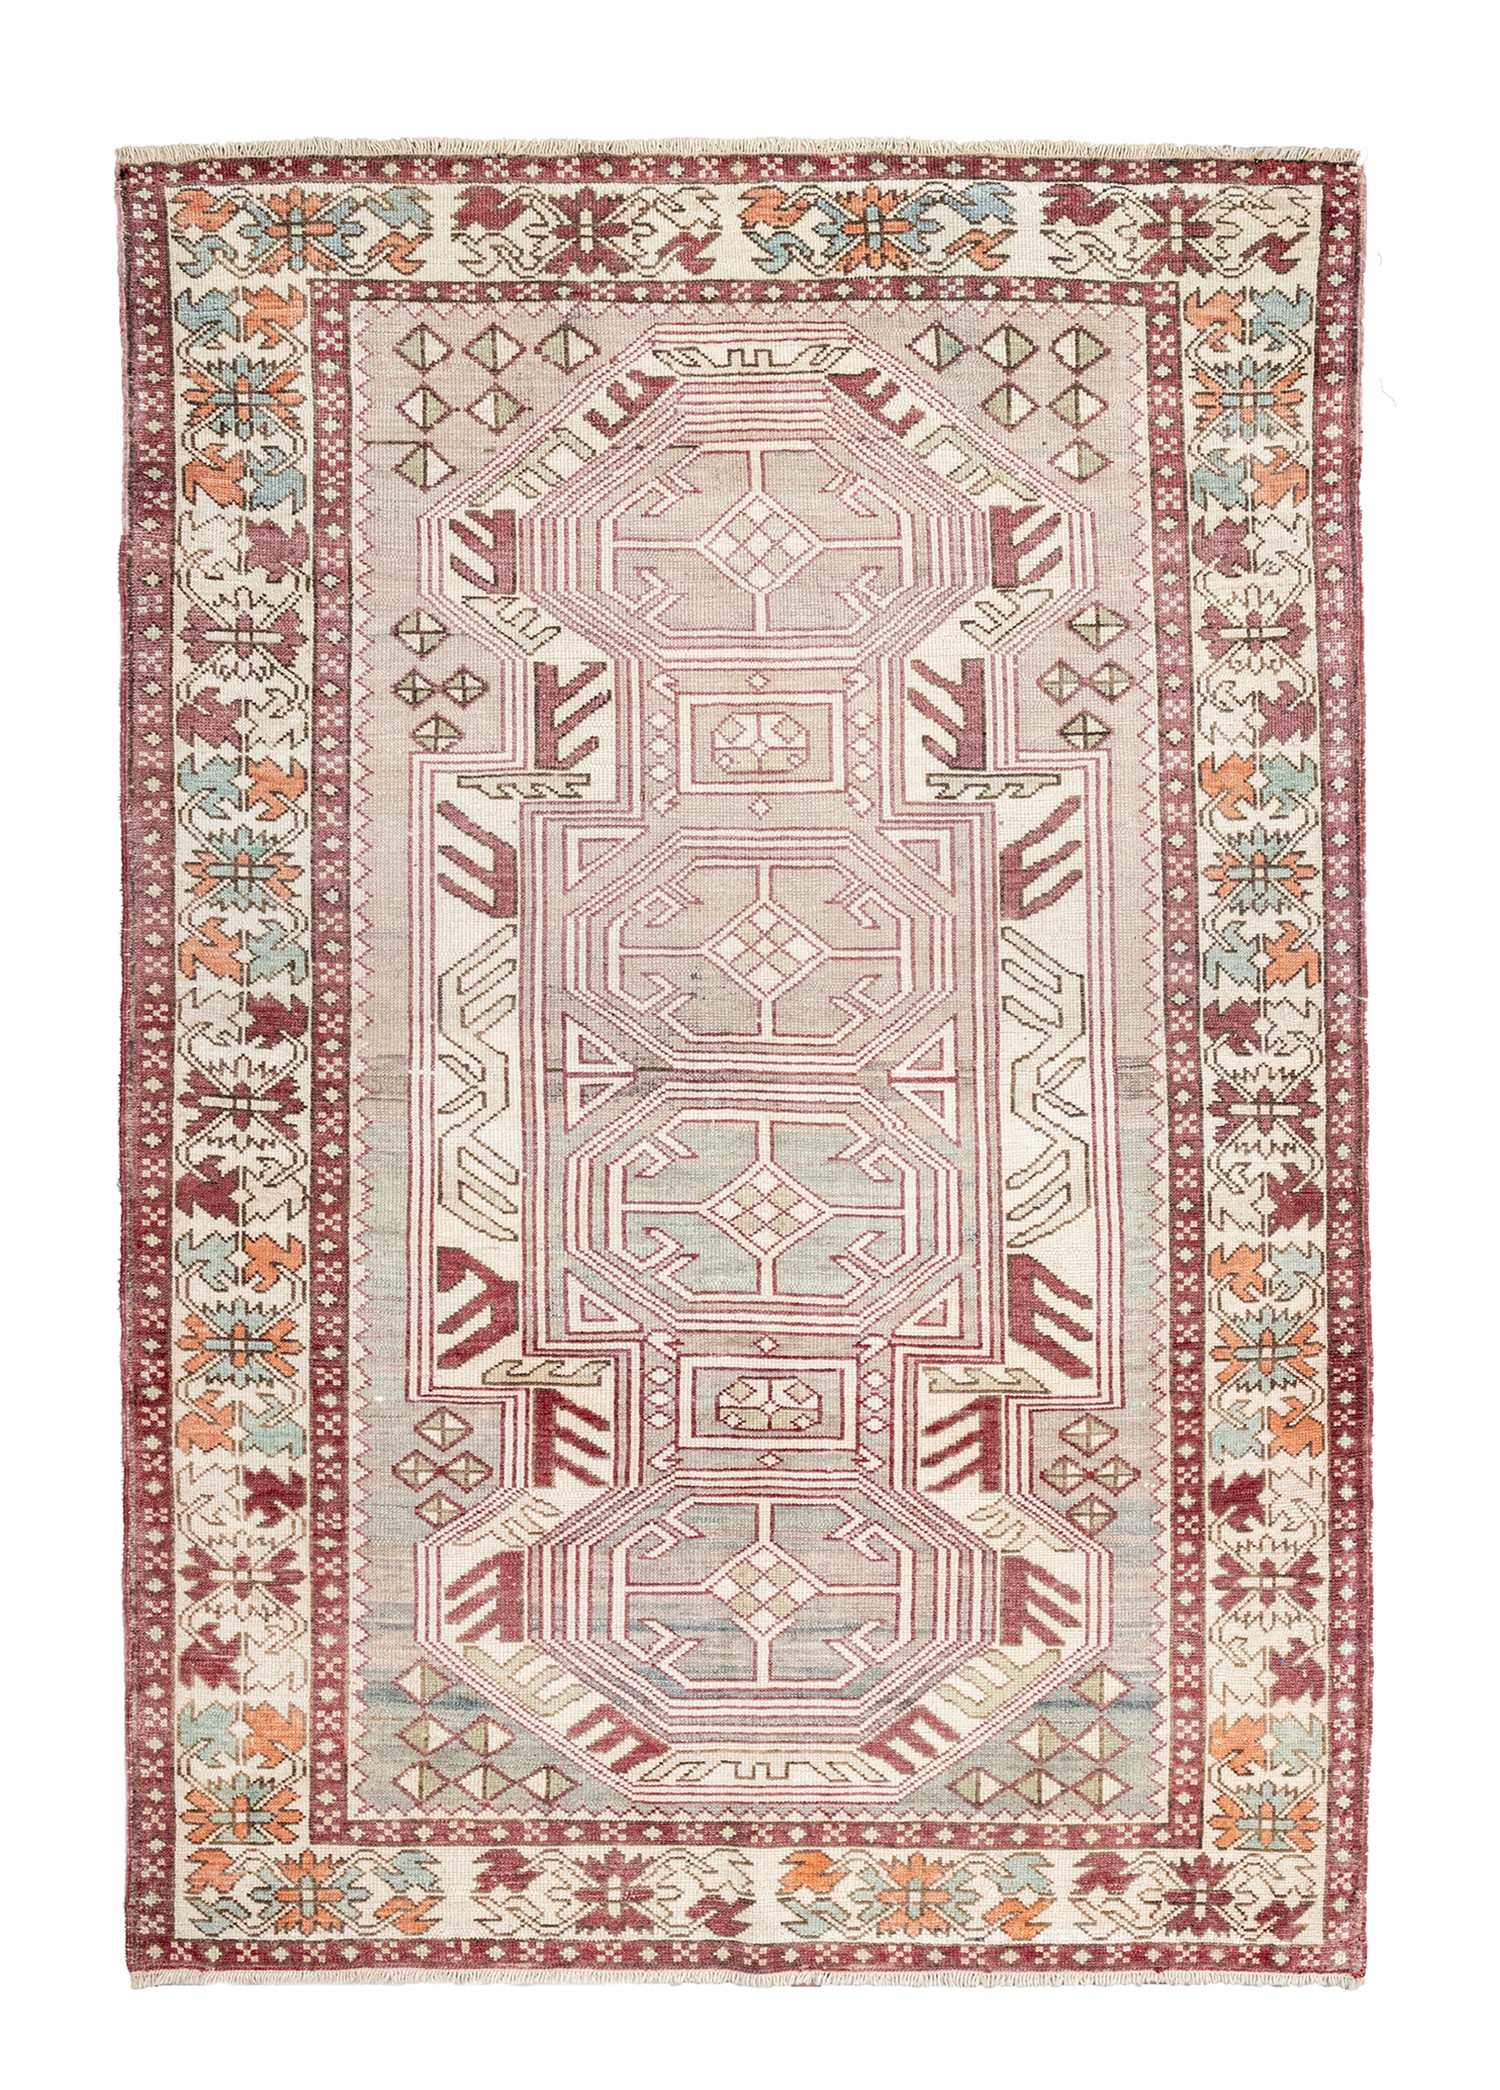 Arsen Primitive Patterned Colorful Hand Woven Wool Carpet 128x187 cm